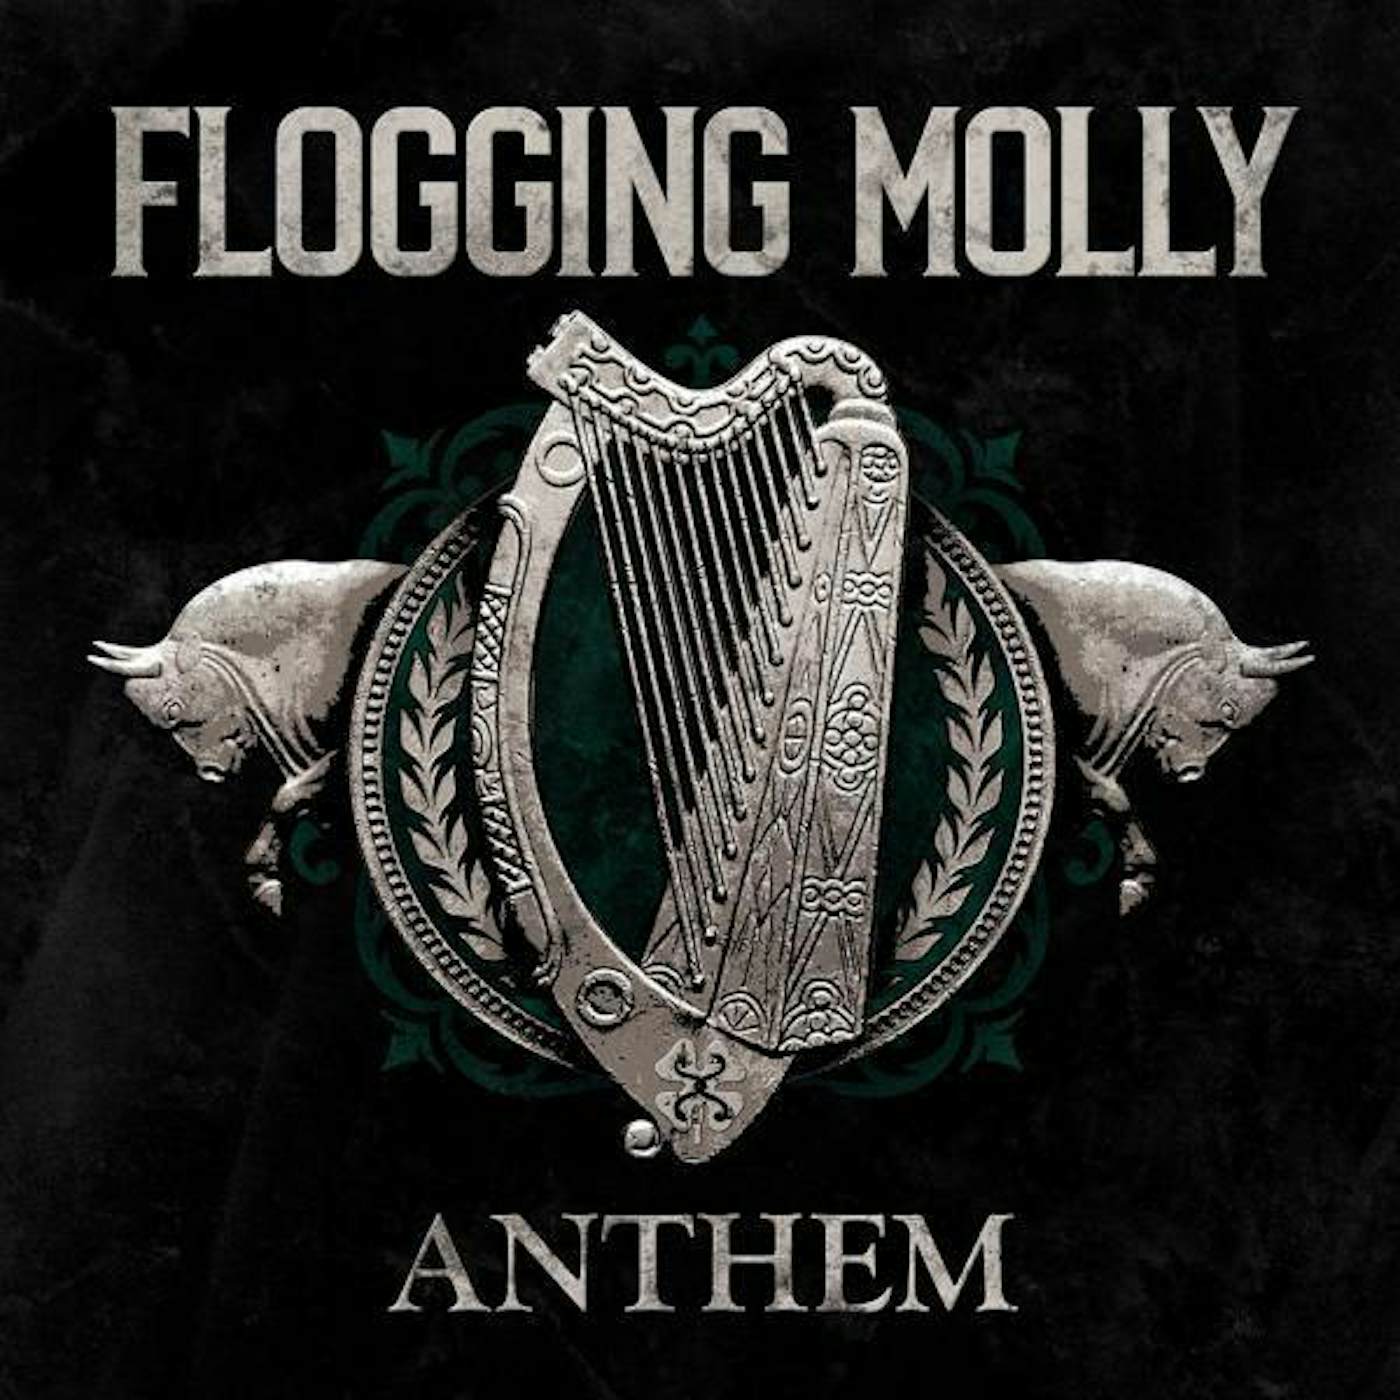 Flogging Molly Anthem Vinyl Record